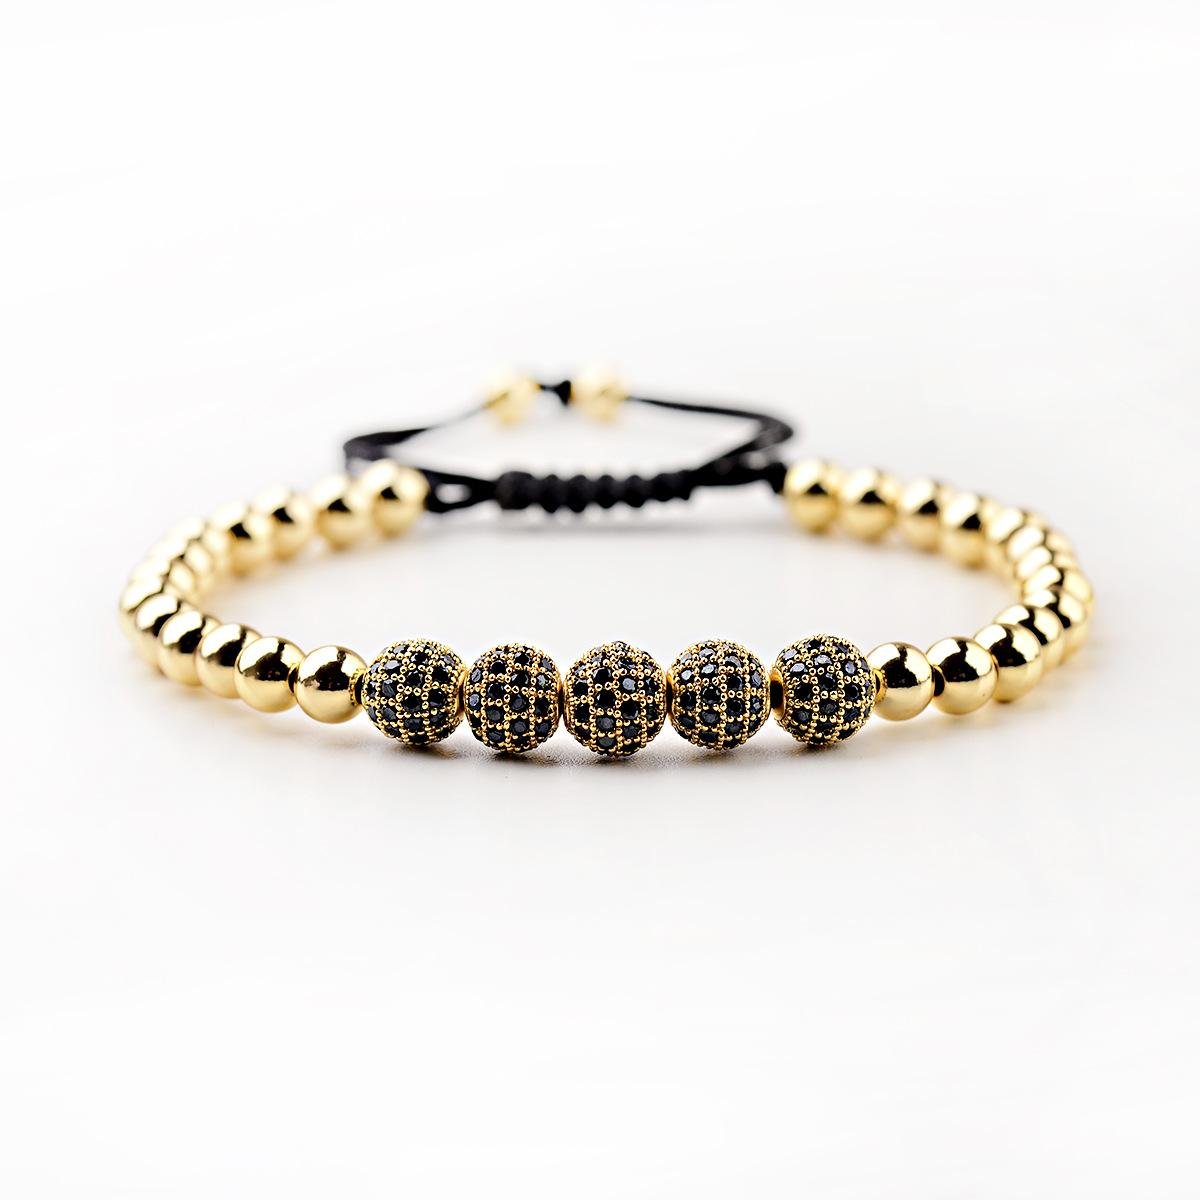 Fashion jewelry copper beads bracelet with micro zircon Ball adjustable bracelet